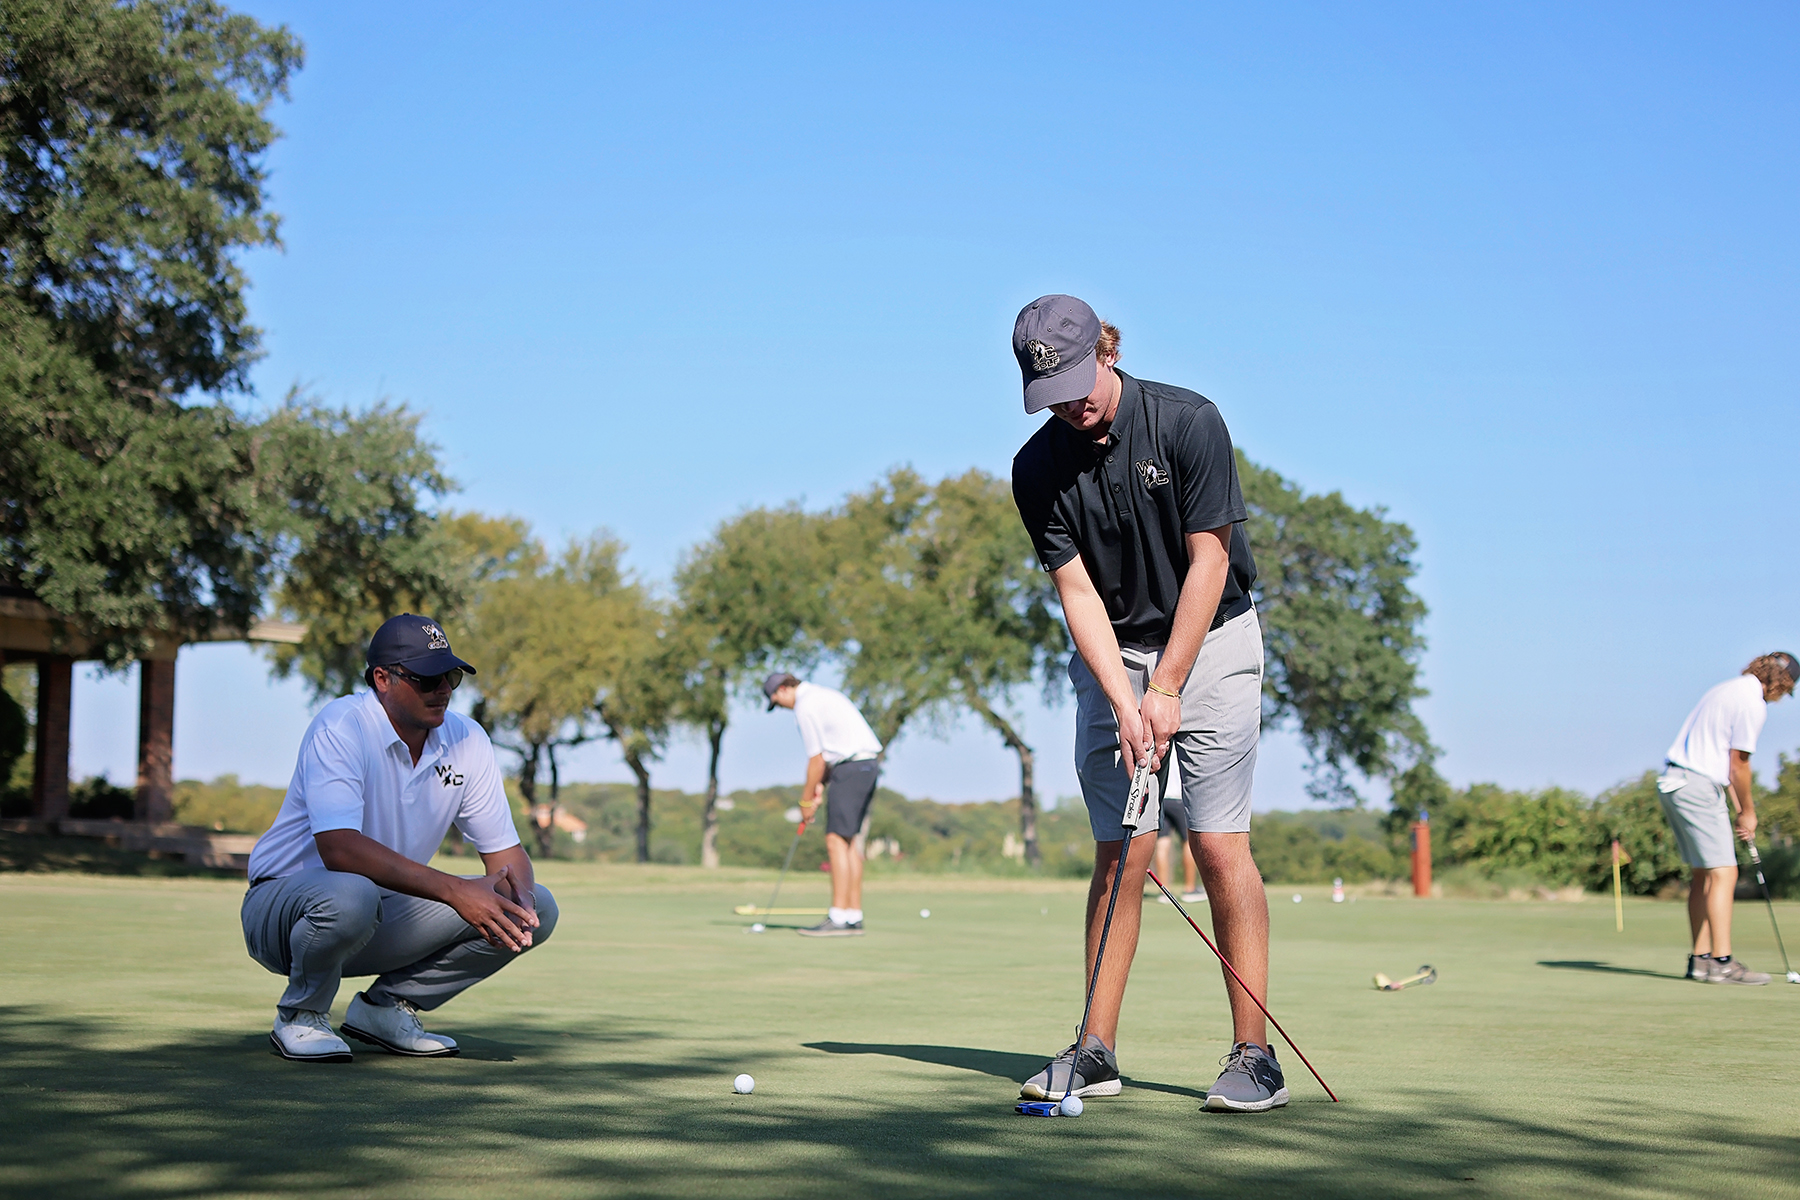 WC golf begins season at Waco River Classic